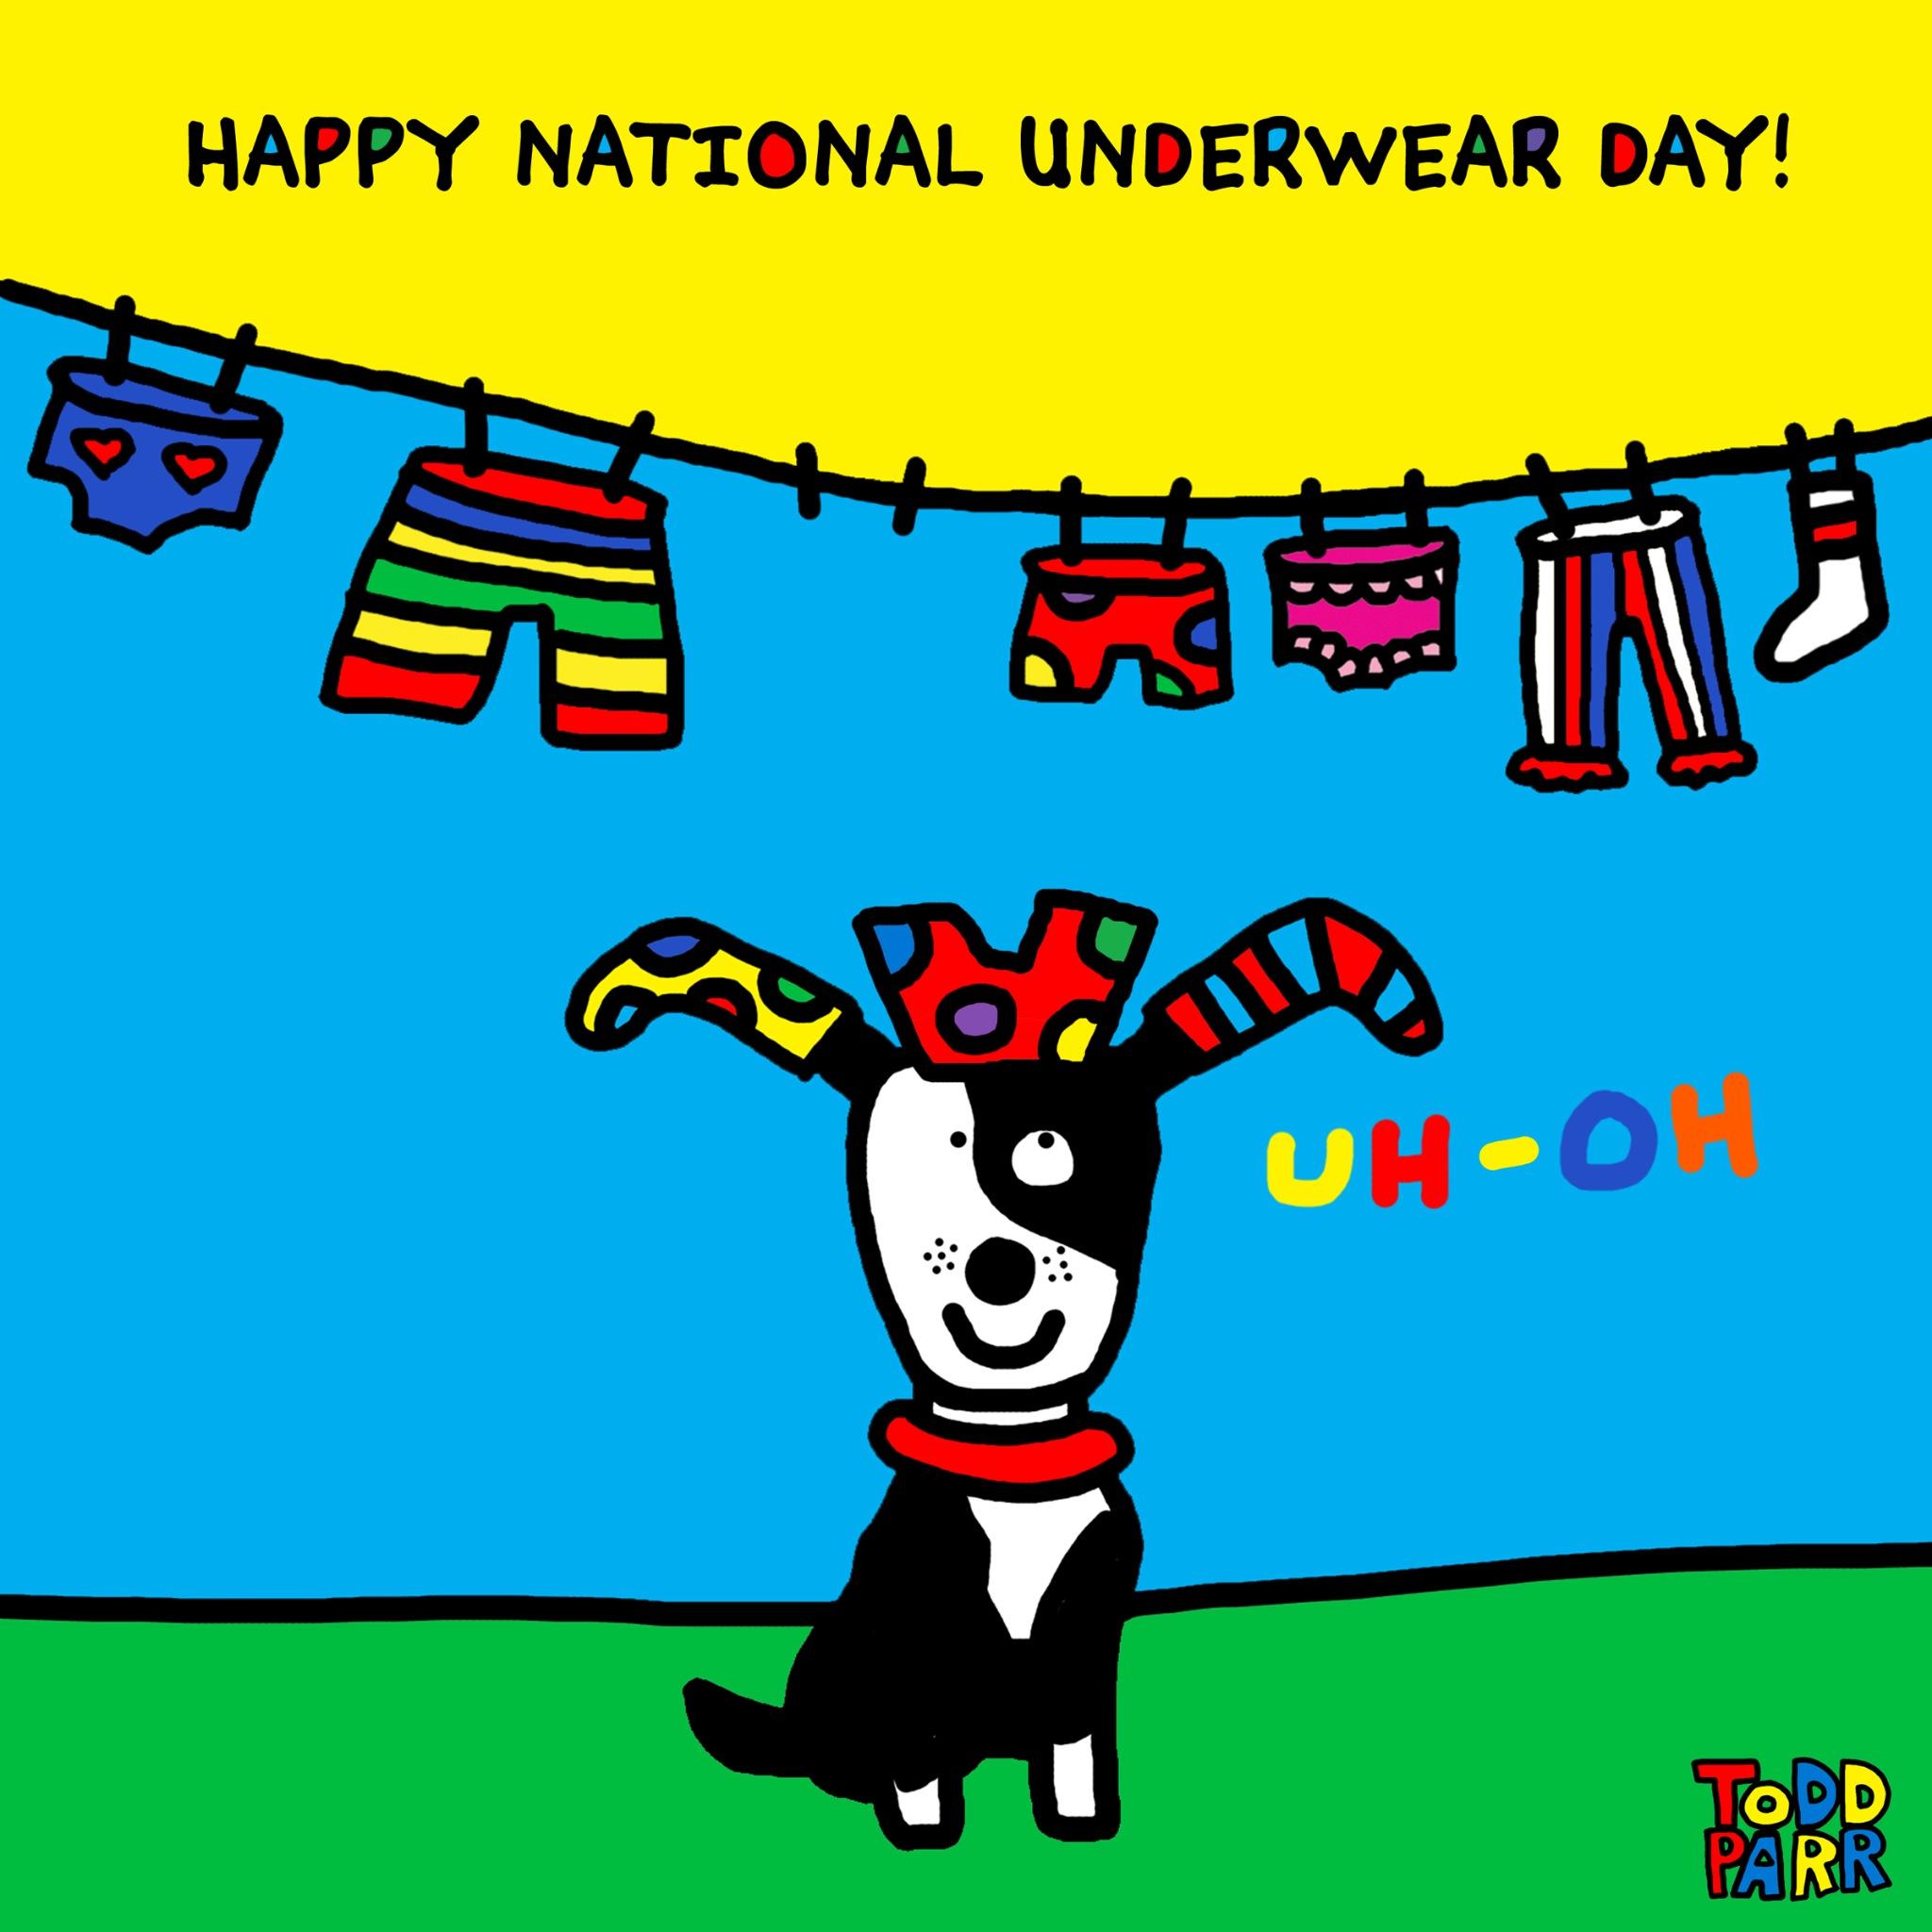 Todd Parr (he/him) on X: Happy National Underwear Day! Love, Todd & Pete.  #myunderwearApp #NationalUnderwearDay #ItsOkayToMakeMistakes #rescue   / X